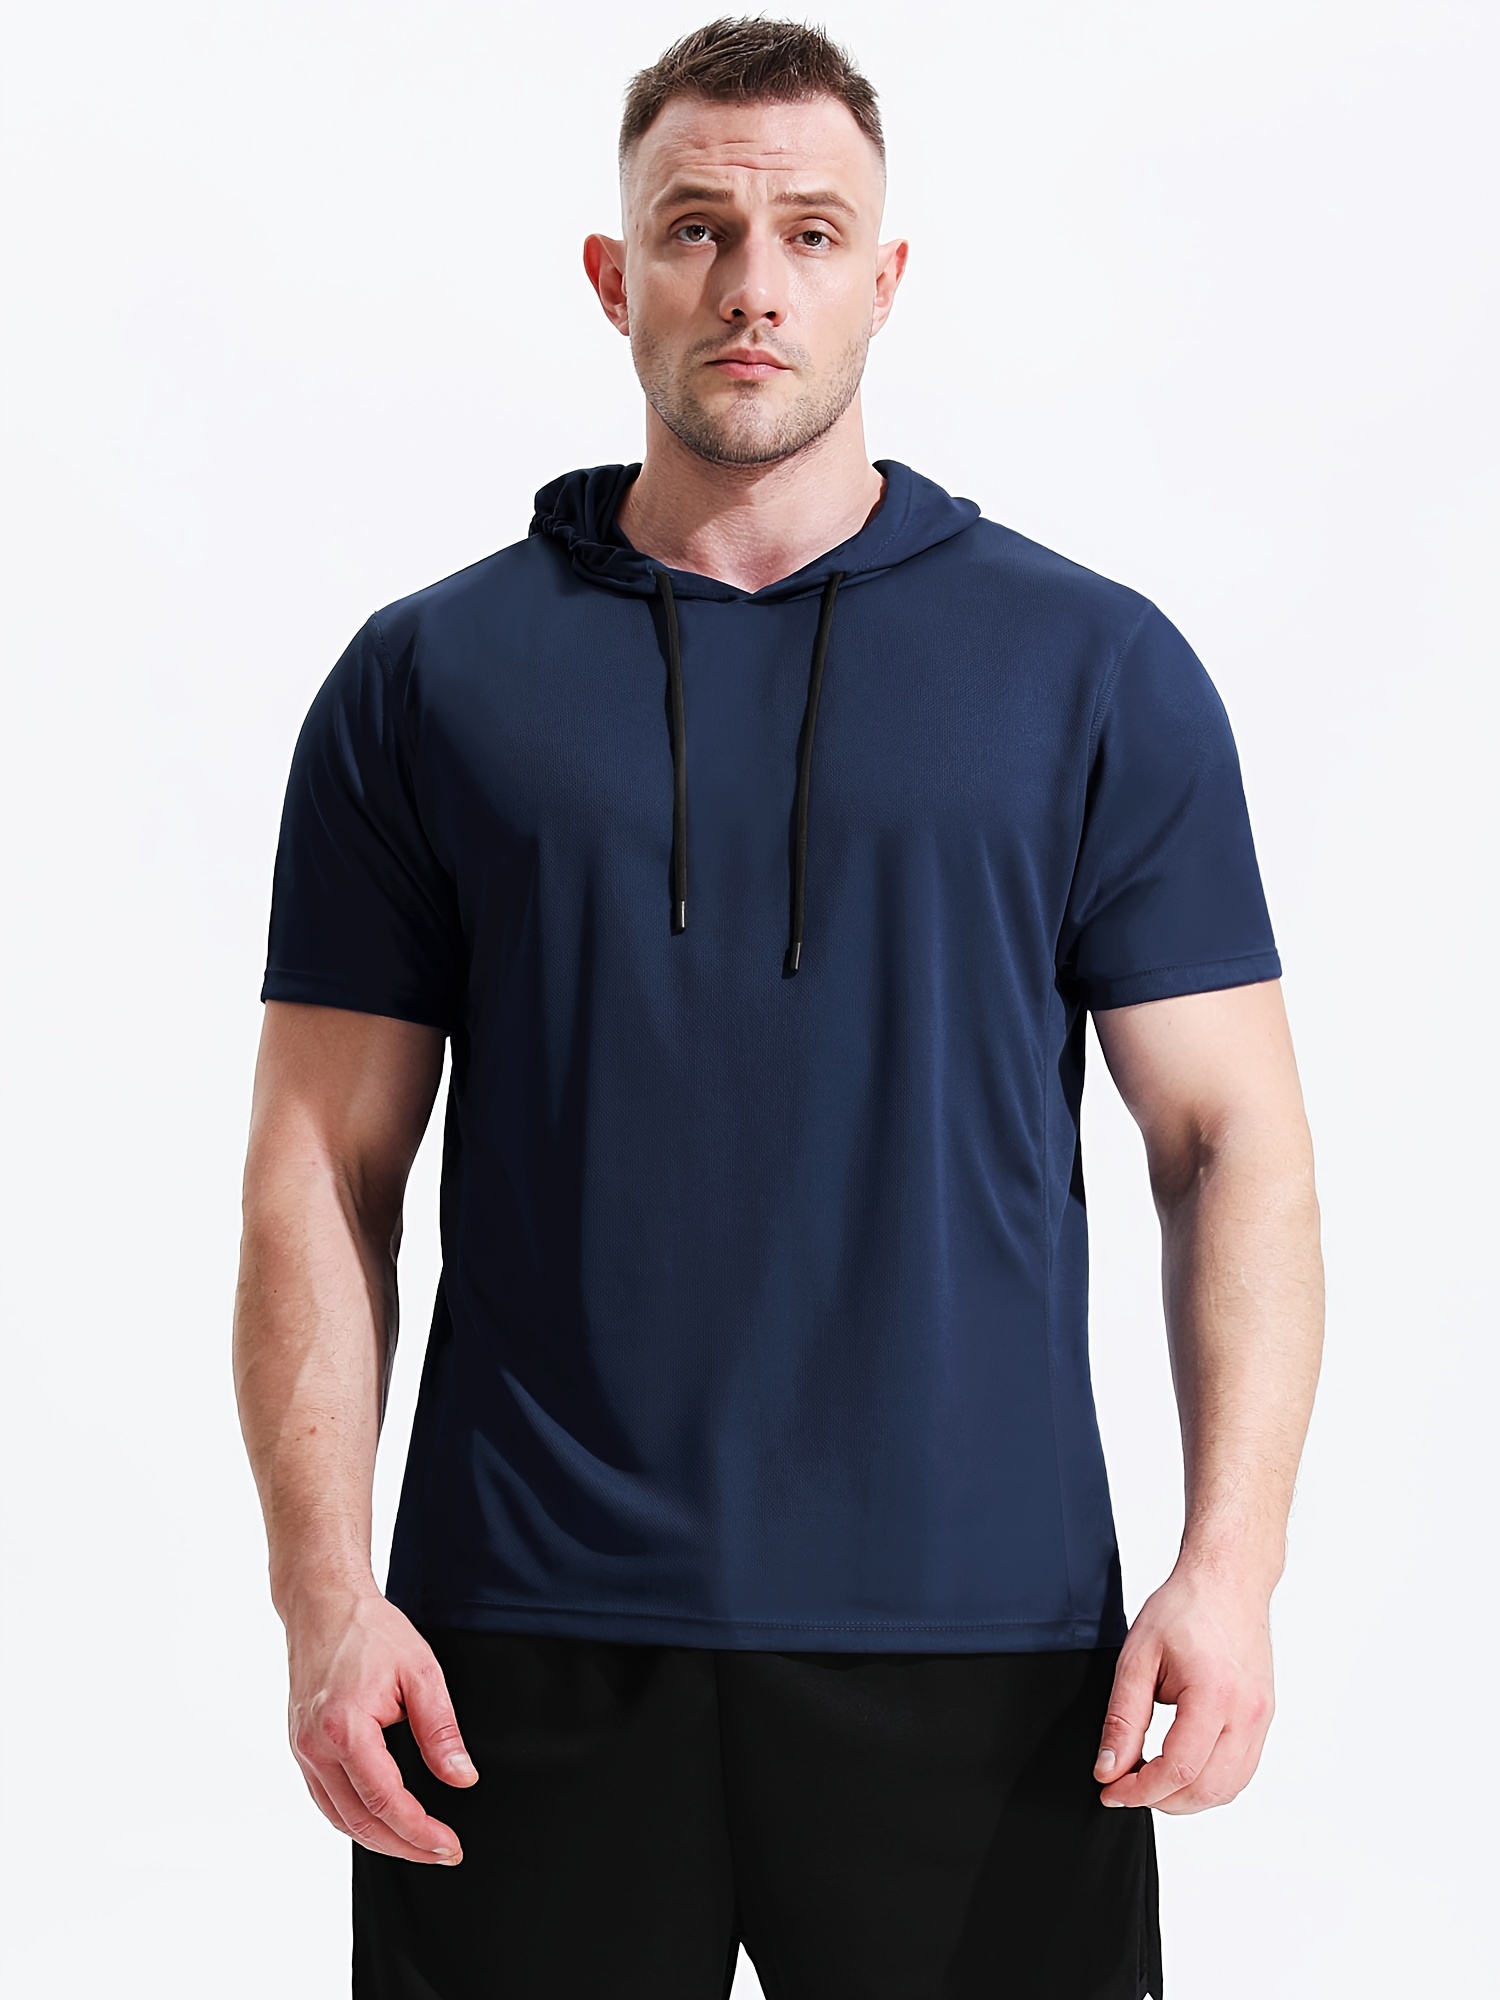 Mens Short Sleeve Hooded T-shirt Sporting Gym Top Tee Shirt Hoodie